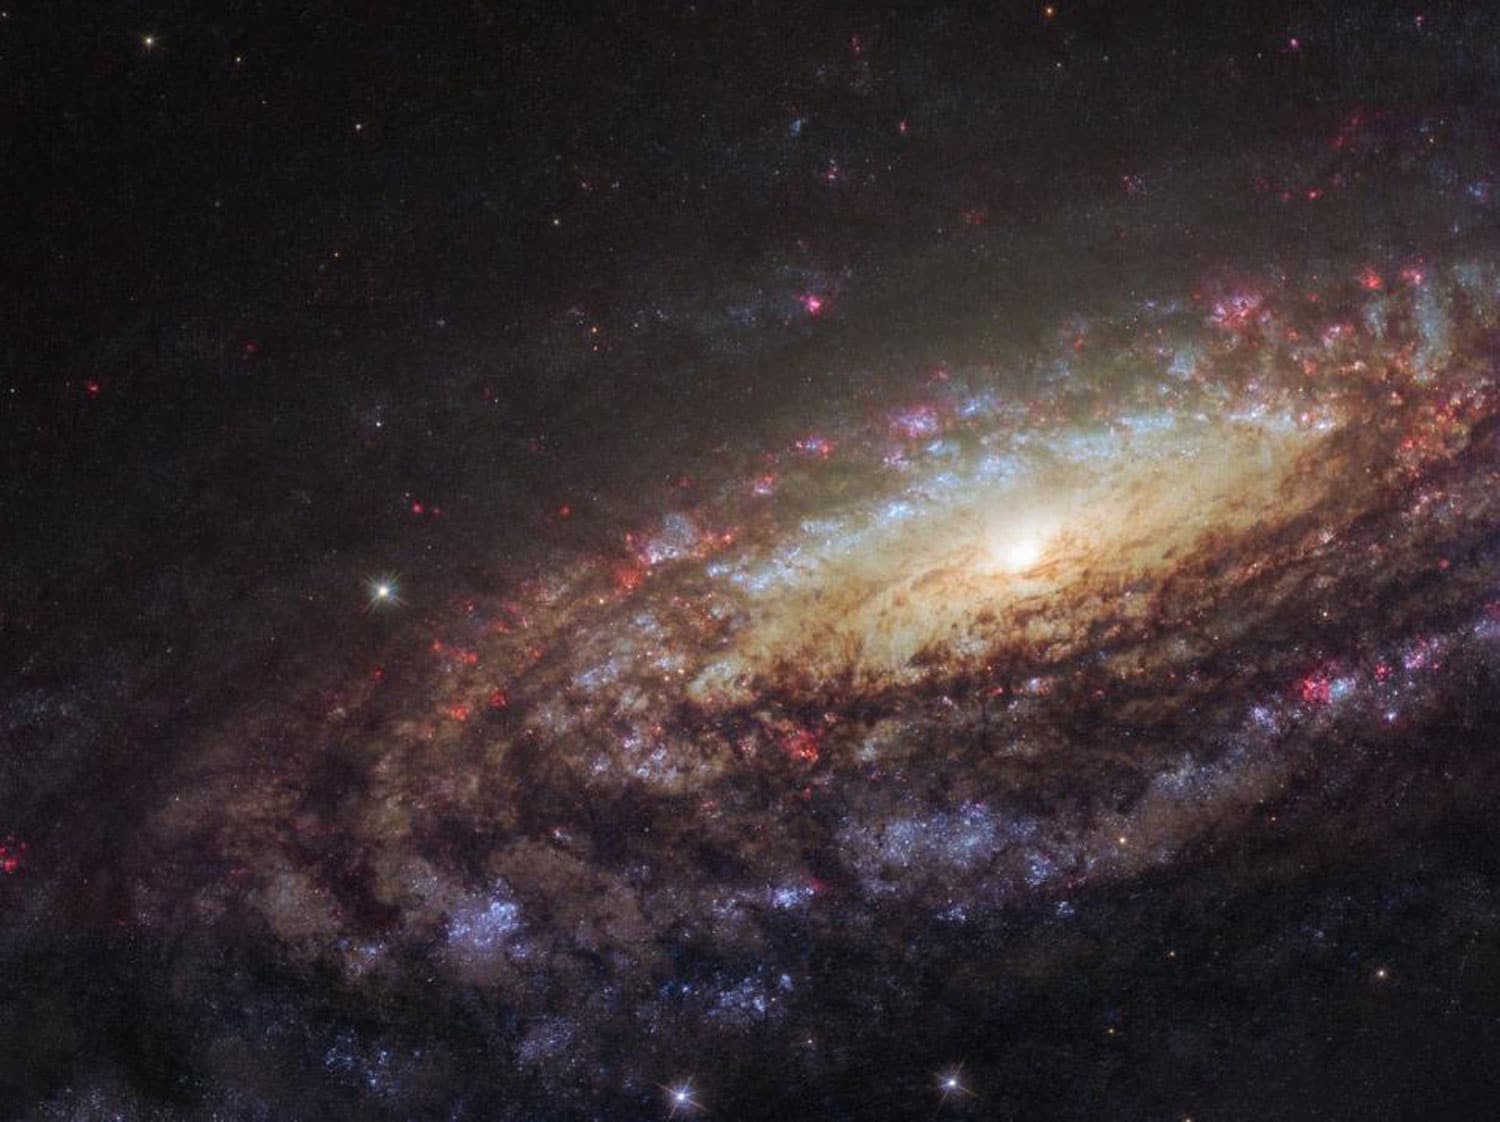 Hubble captured a big, beautiful spiral galaxy 